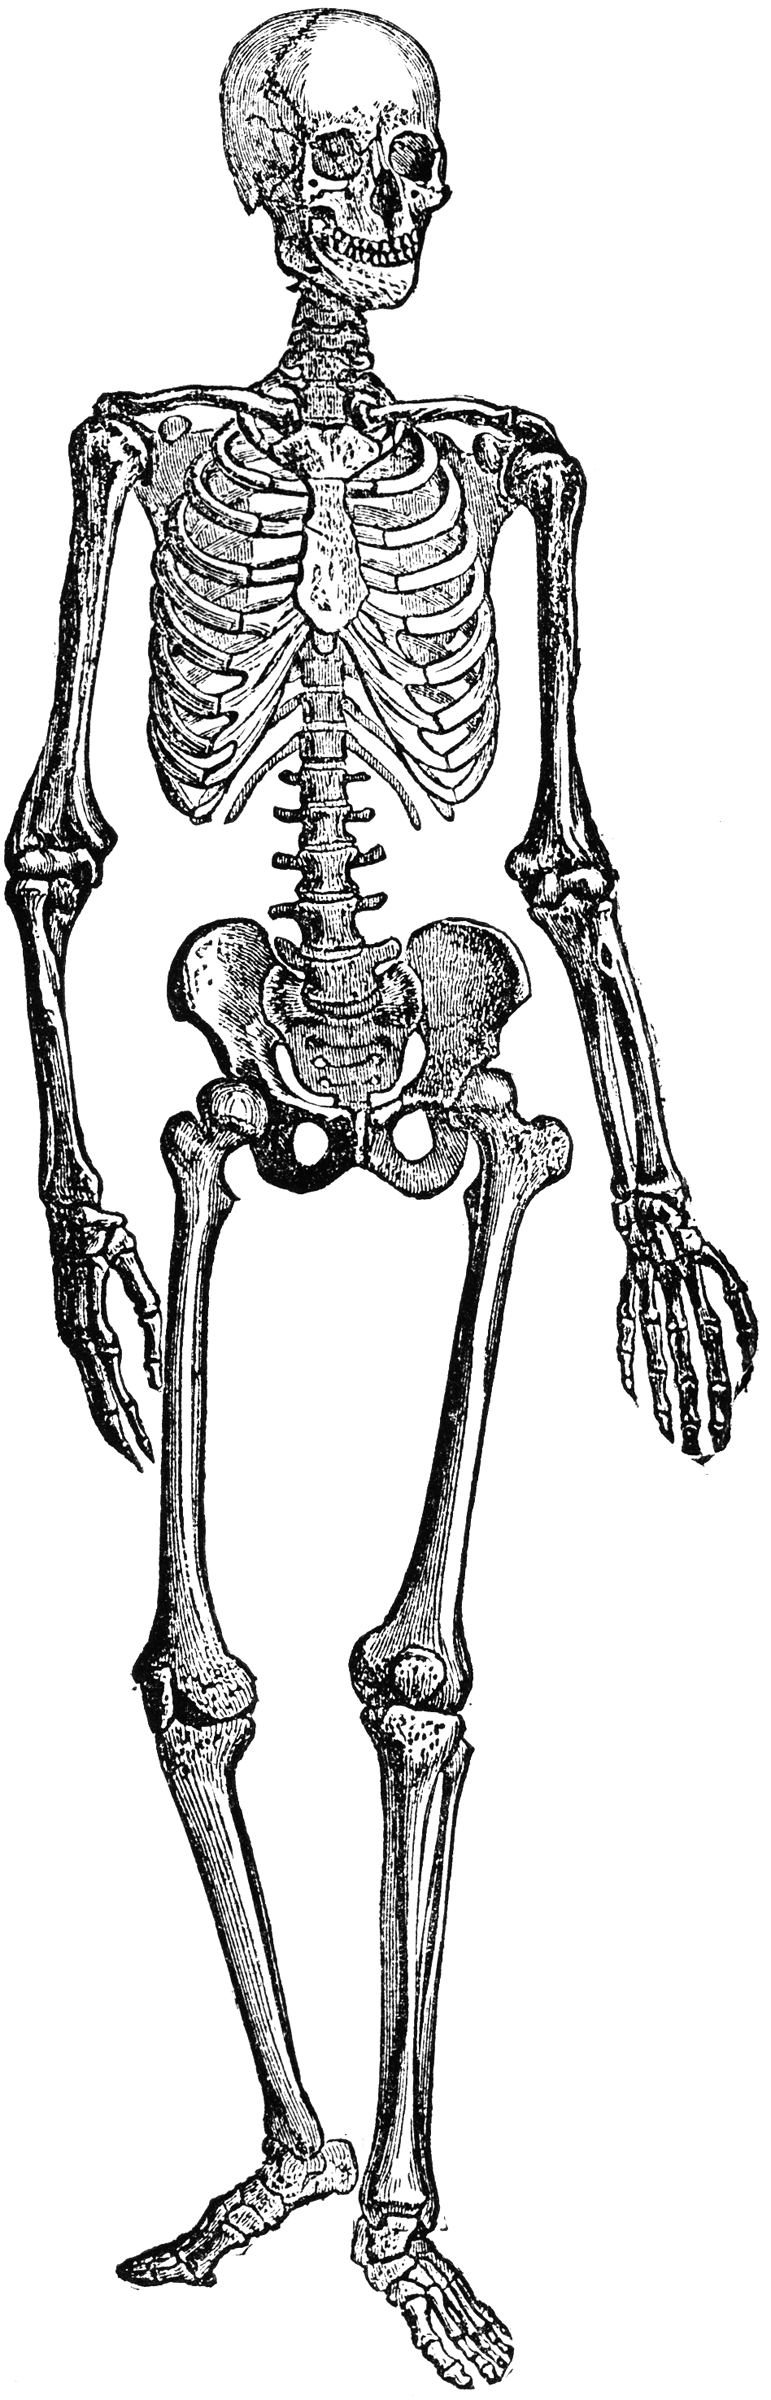 Human Skeleton   Clipart Etc